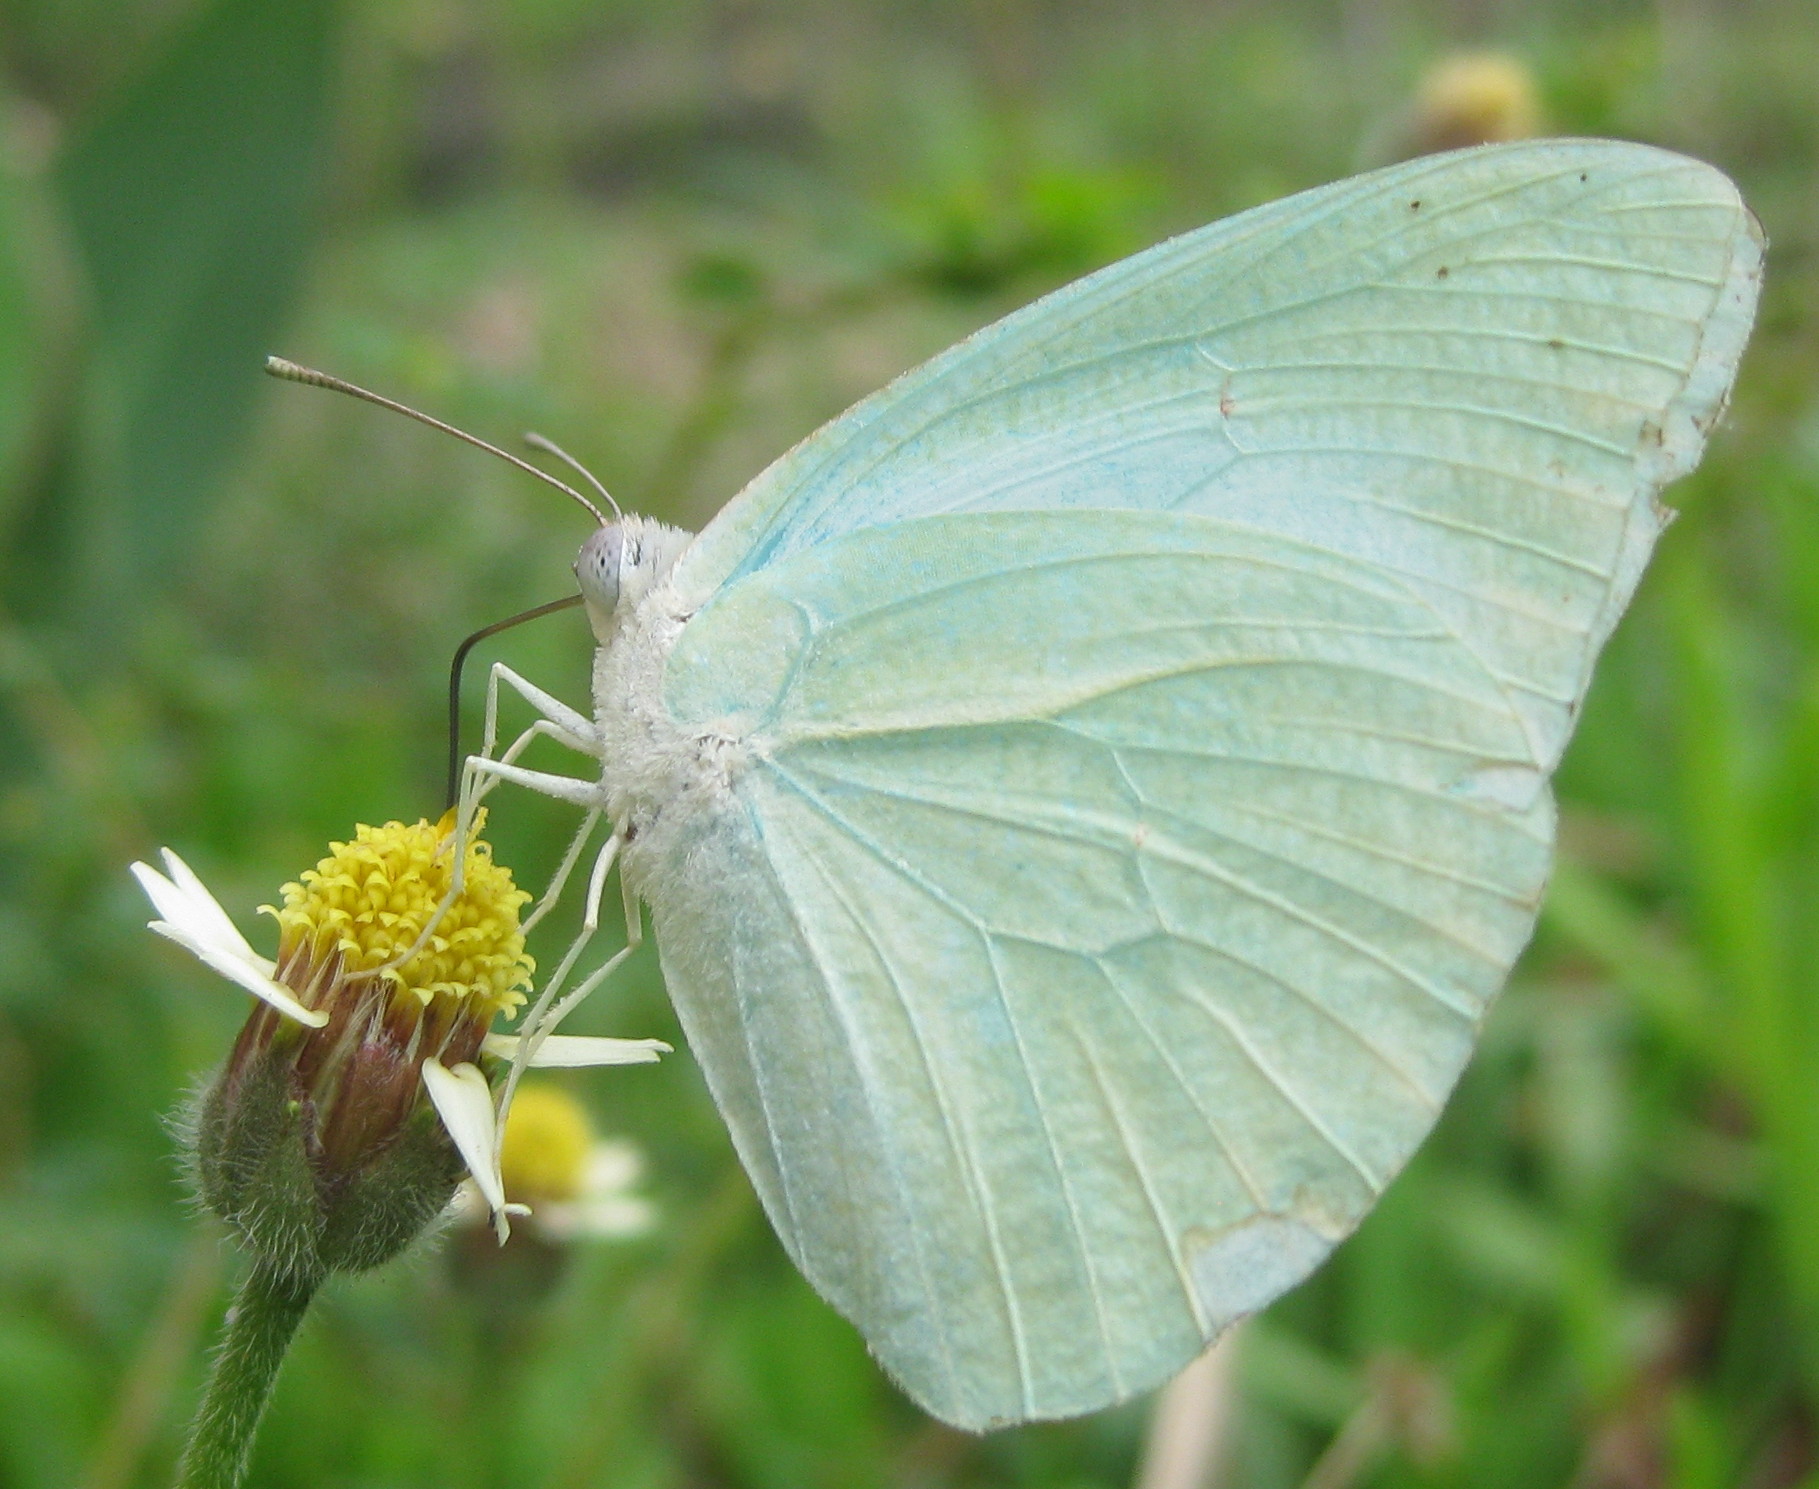 File:Butterfly - White (5424828234).jpg - Wikimedia Commons